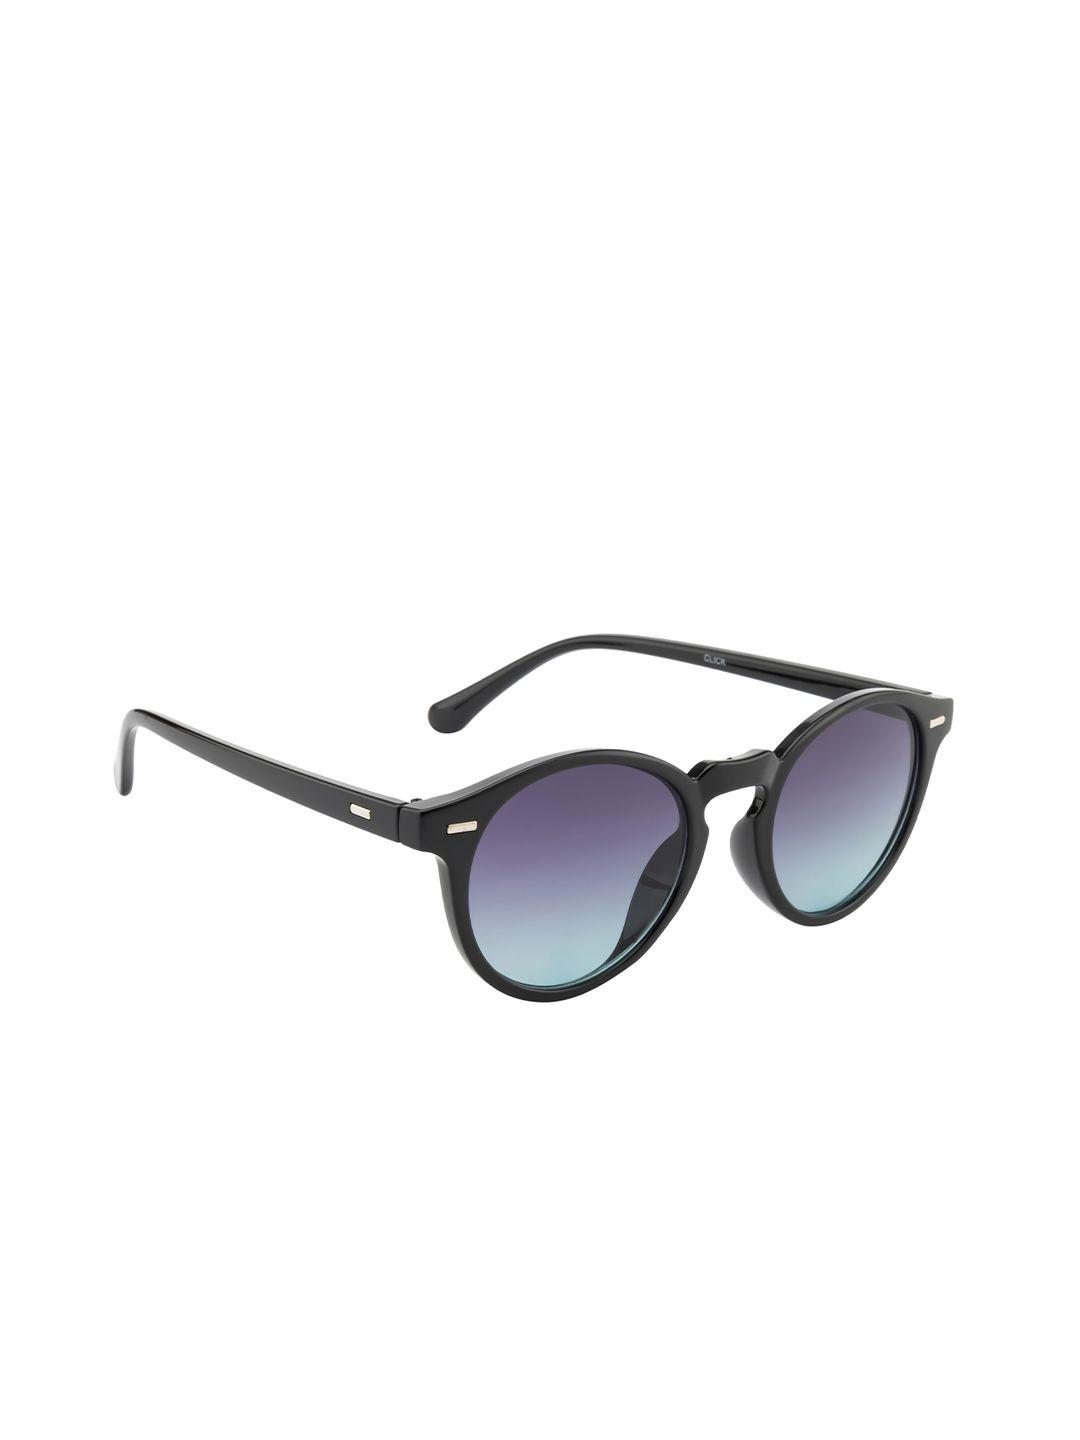 mast-&-harbour-full-rim-round-sunglasses-with-uv-protected-lens-mh-m25149